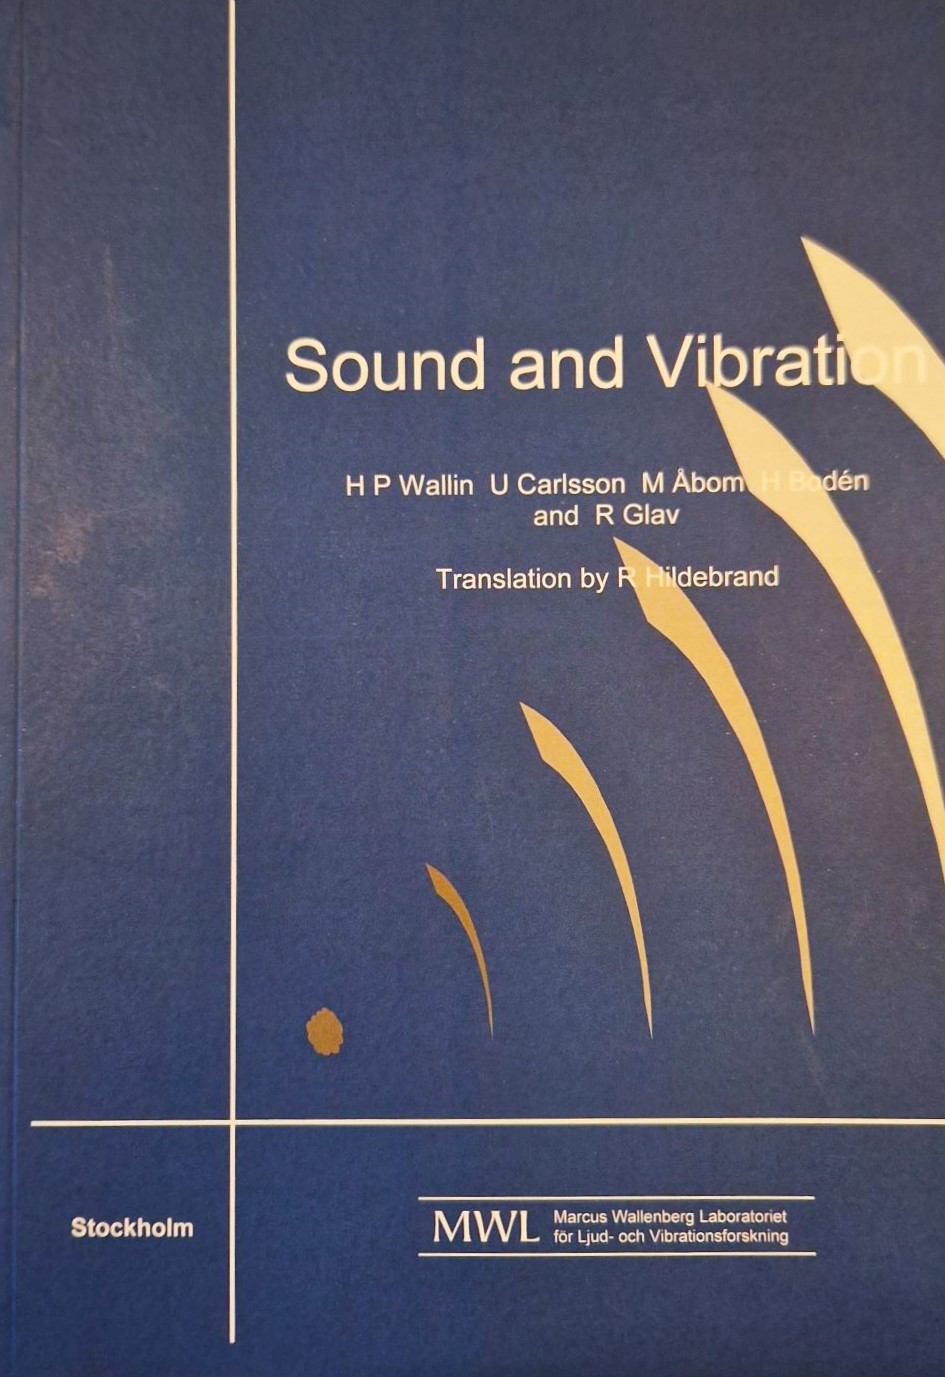 Sound and Vibration